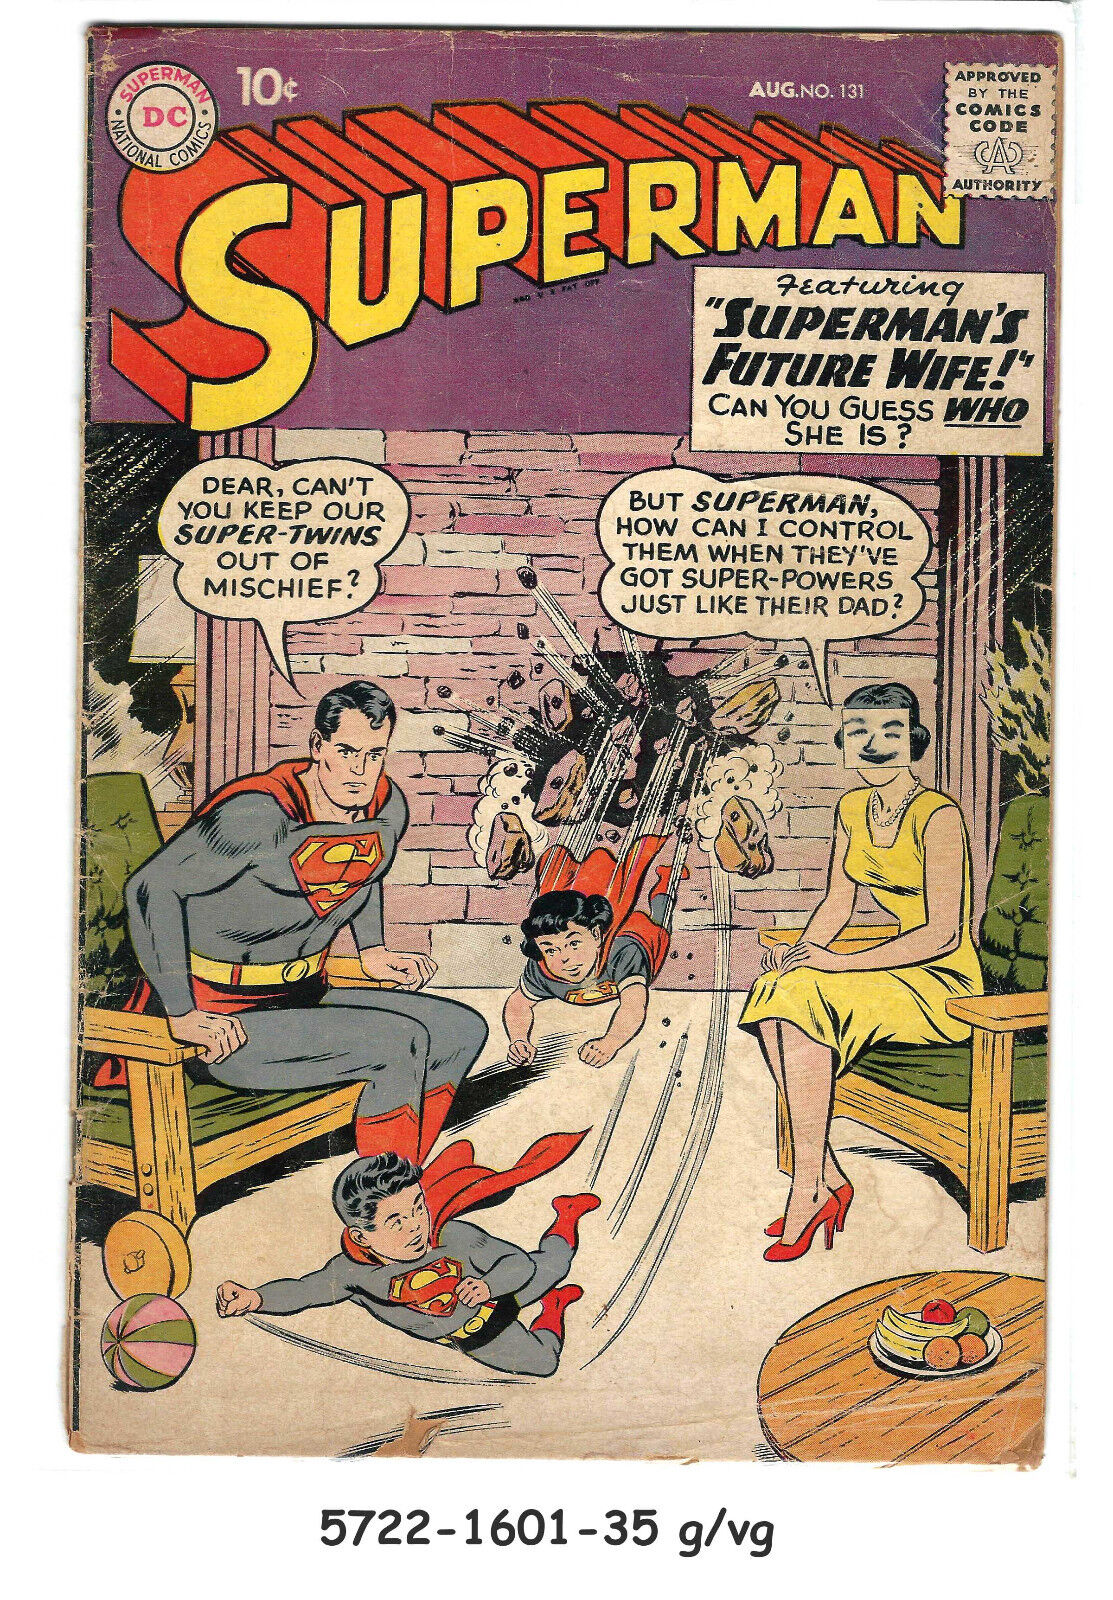 Superman #131 (Aug 1959, DC) g/vg